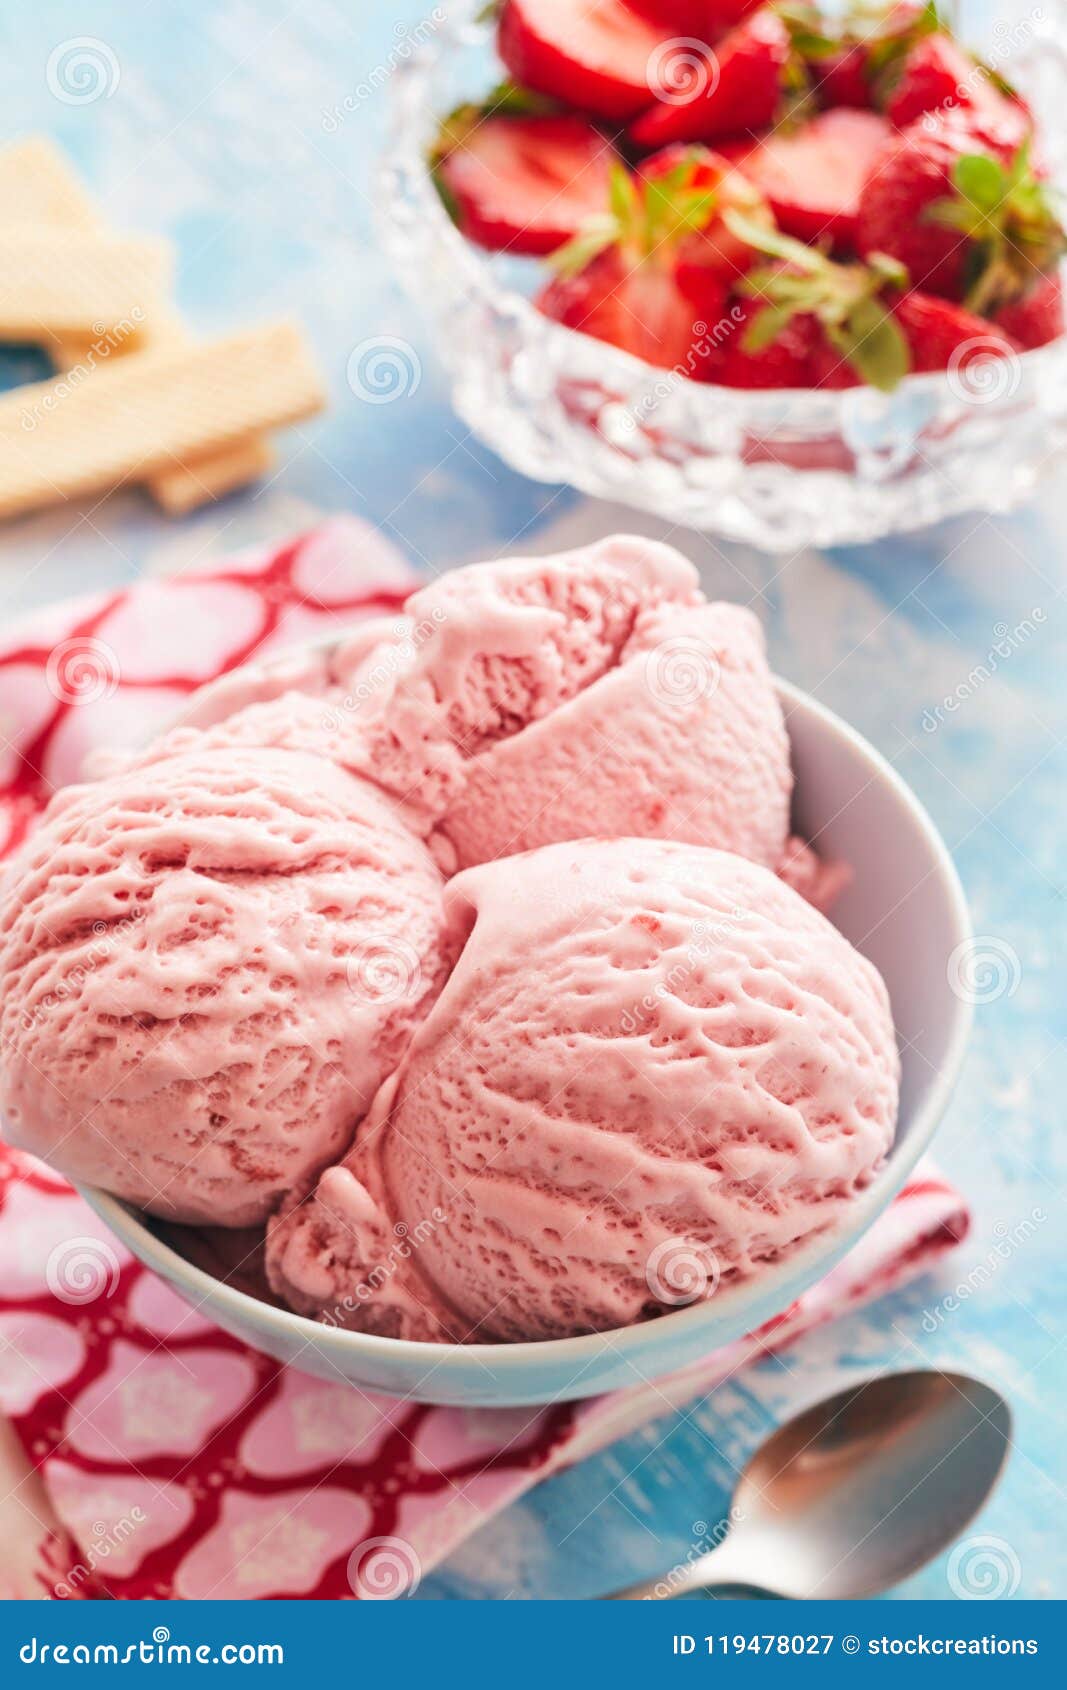 Bowl Of Creamy Artisanal Strawberry Ice-cream Stock Image - Image of ...